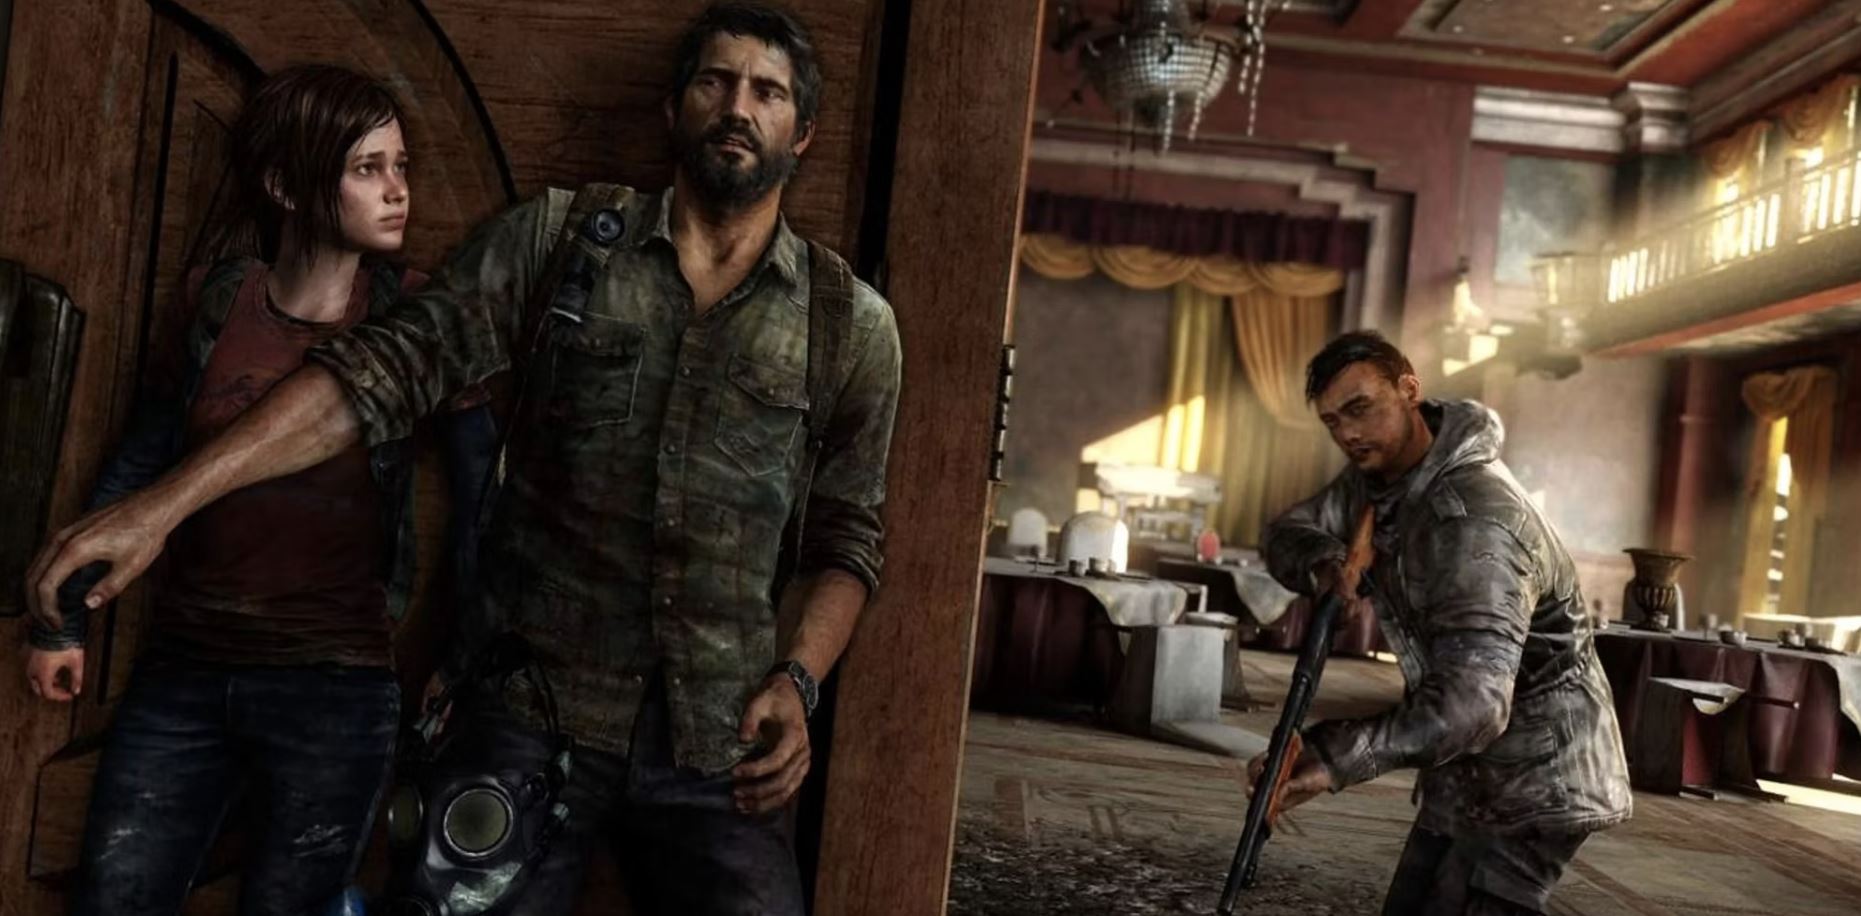 Who is Kathleen in The Last of Us game? Melanie Lynskey's